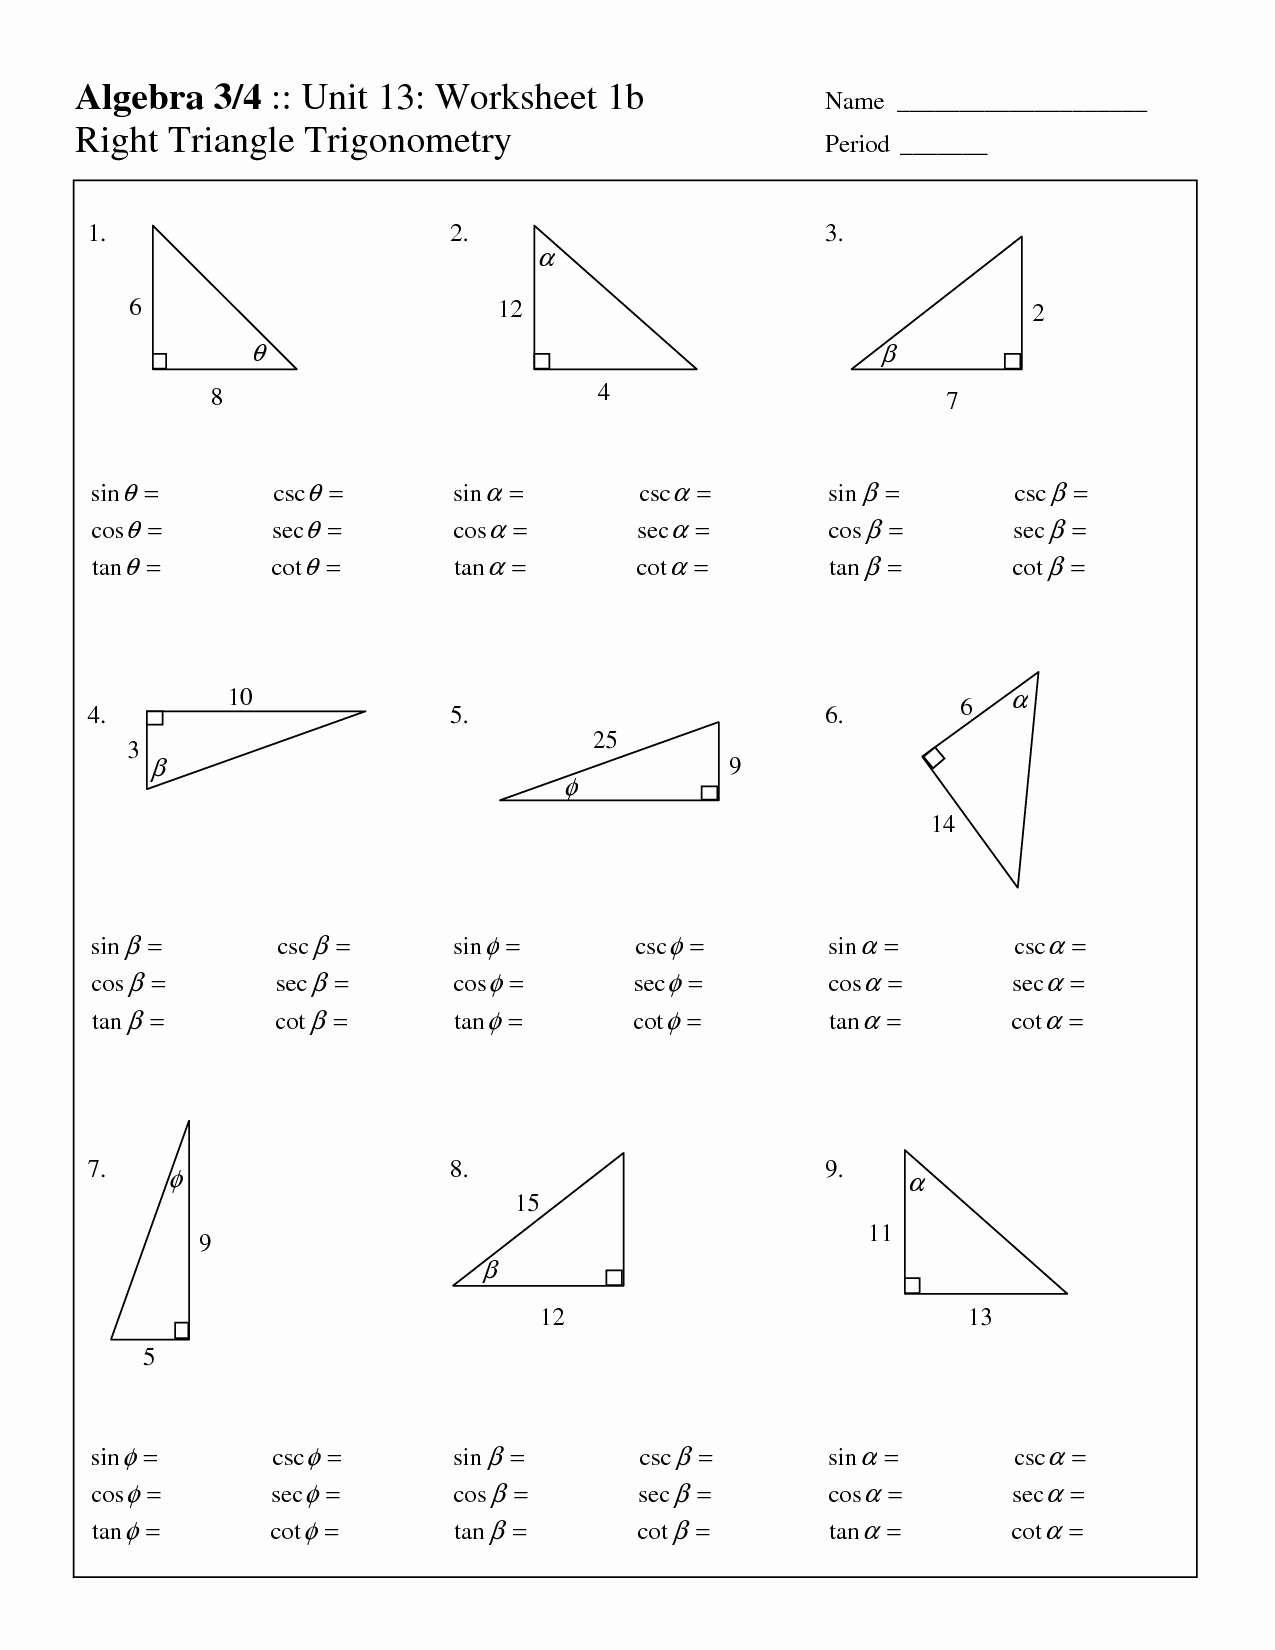 Right Triangle Trigonometry Worksheet Answers Awesome 13 Best Of College Trigonometry Worksheets Pre